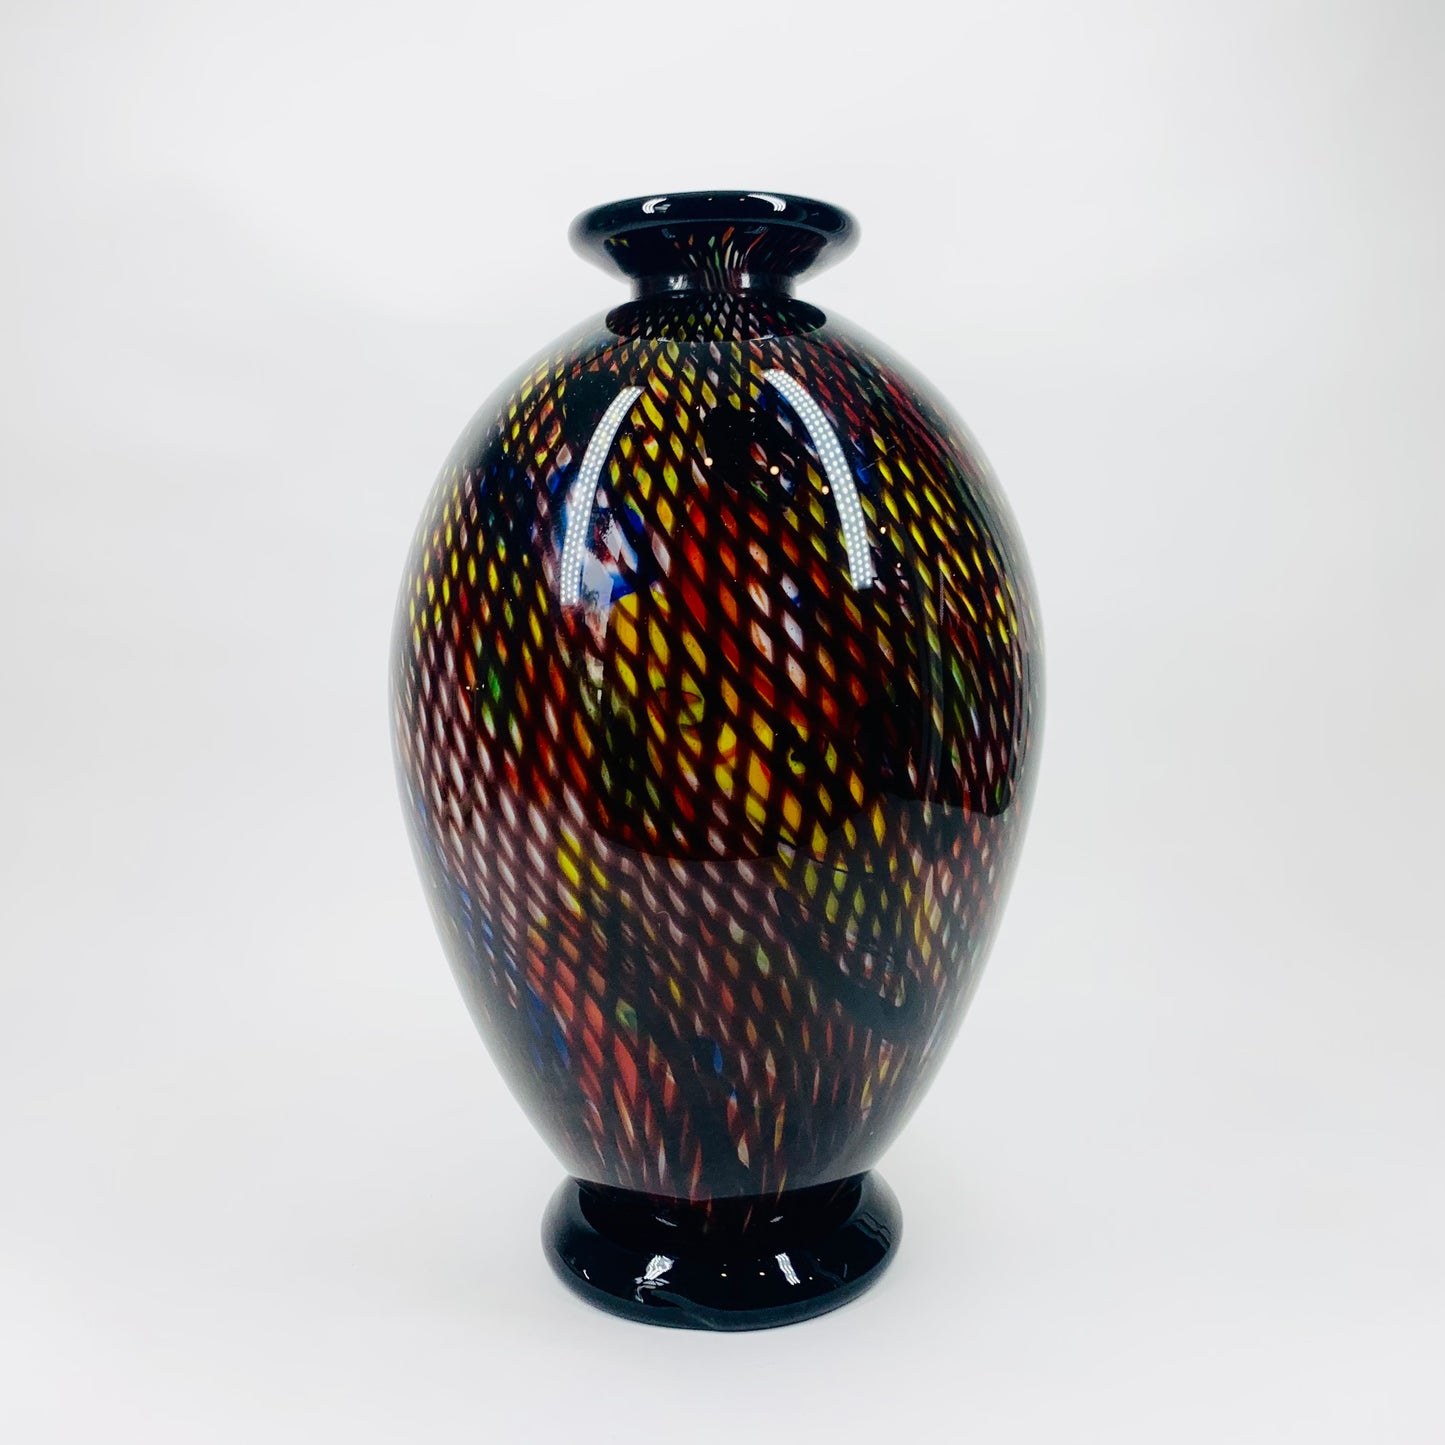 Extremely rare Midcentury Italian cased Millefiori latticino stripes bottle vase